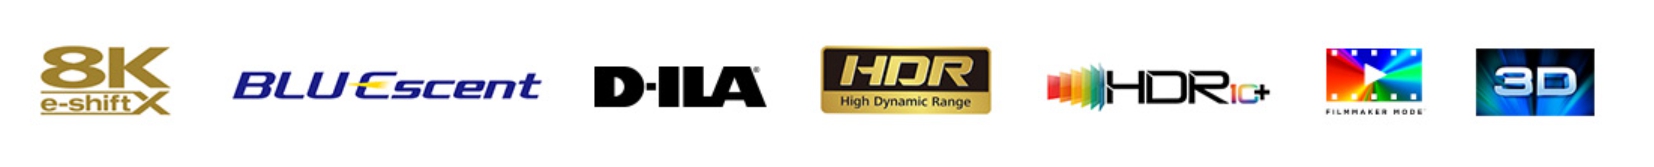 8K e-shiftX BLUEscent D-ILA HDR HDR10+ FILMMAKER MODE 3D